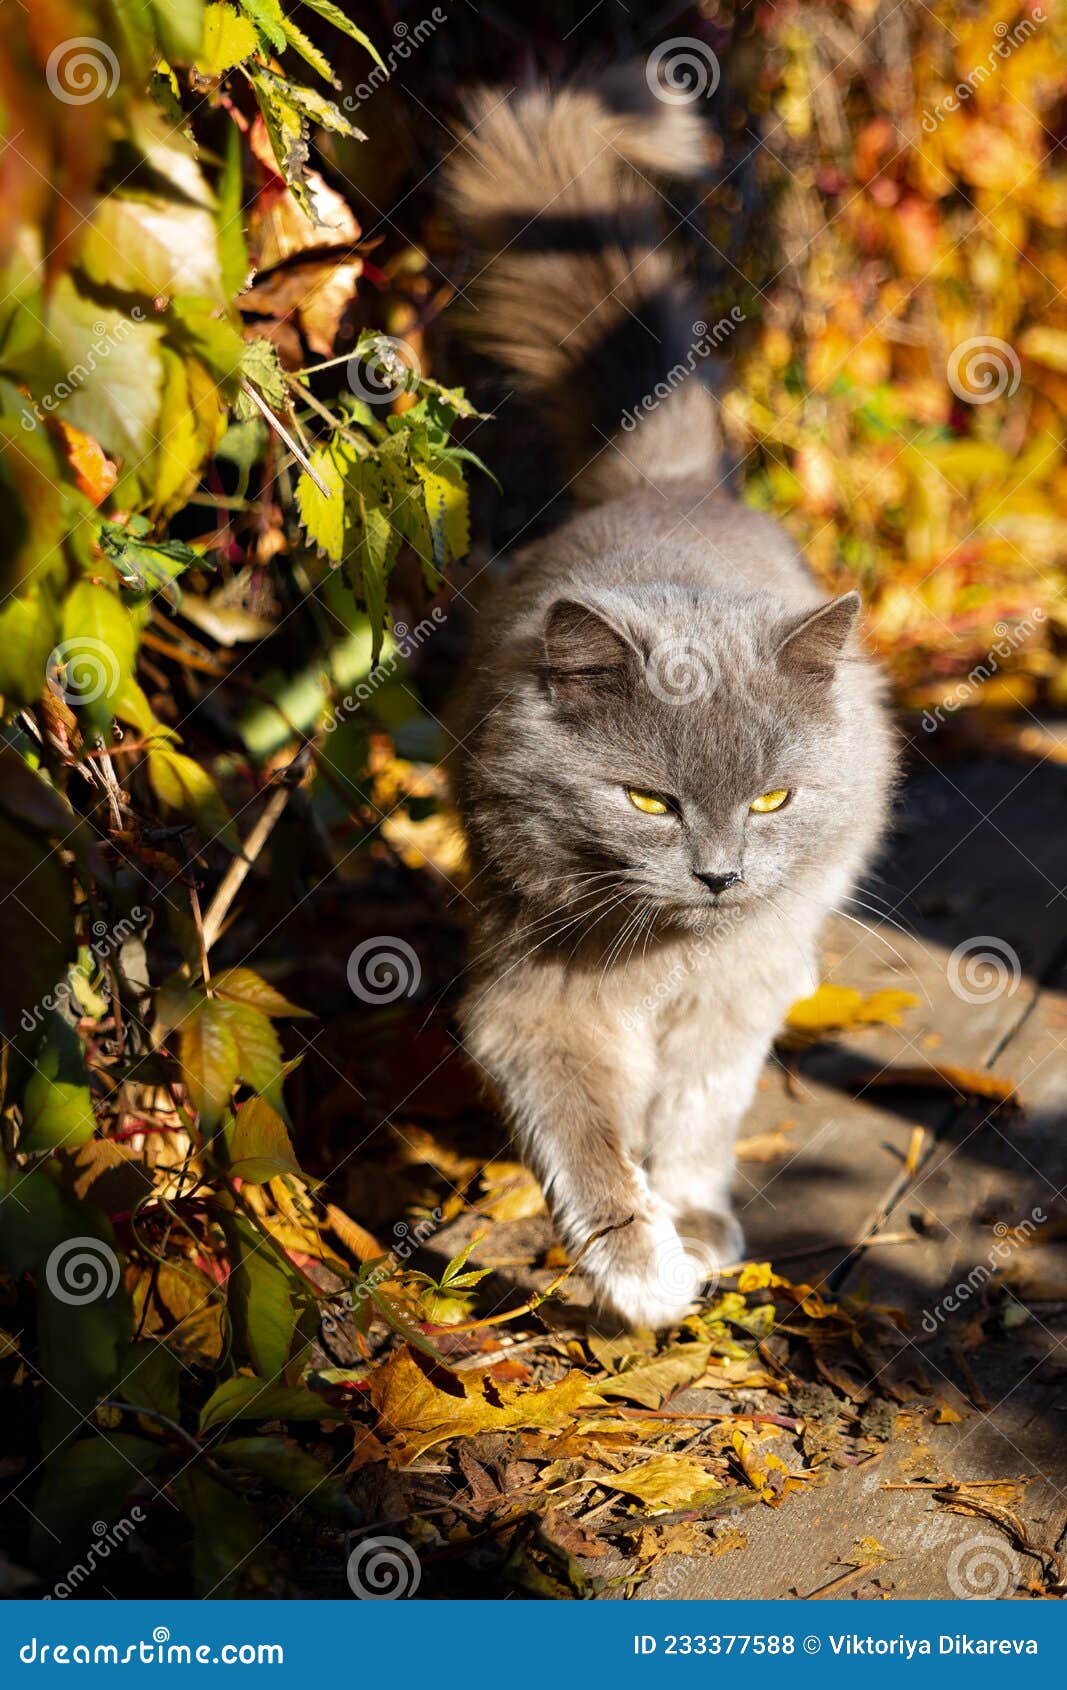 a big, fluffy, gray cat defiles on a wooden platform.